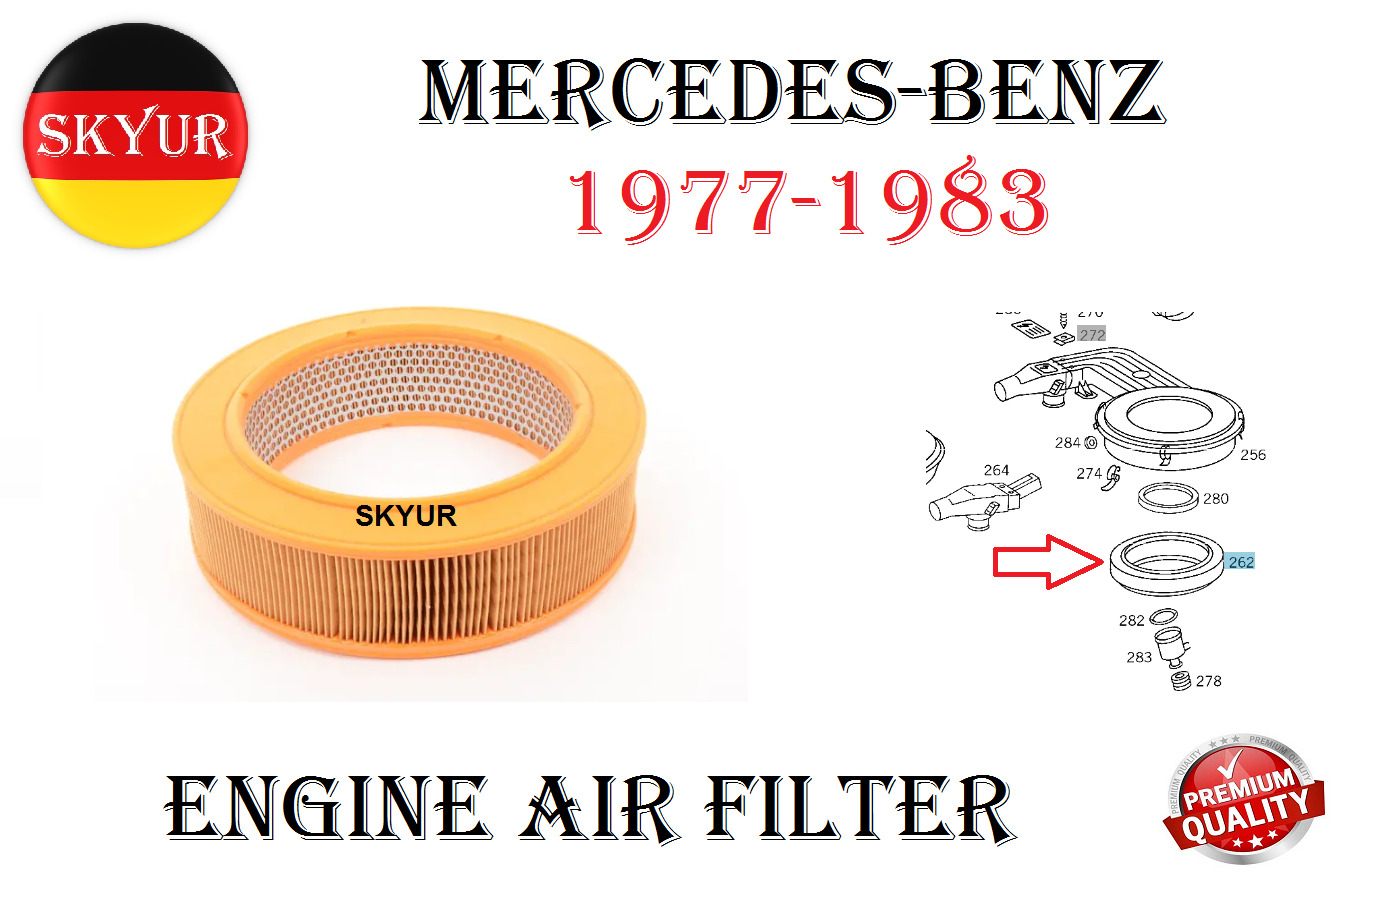 Engine Air Filter For 1977-1983 Mercedes Benz 240D, 300CD, 300D, 300TD Premium